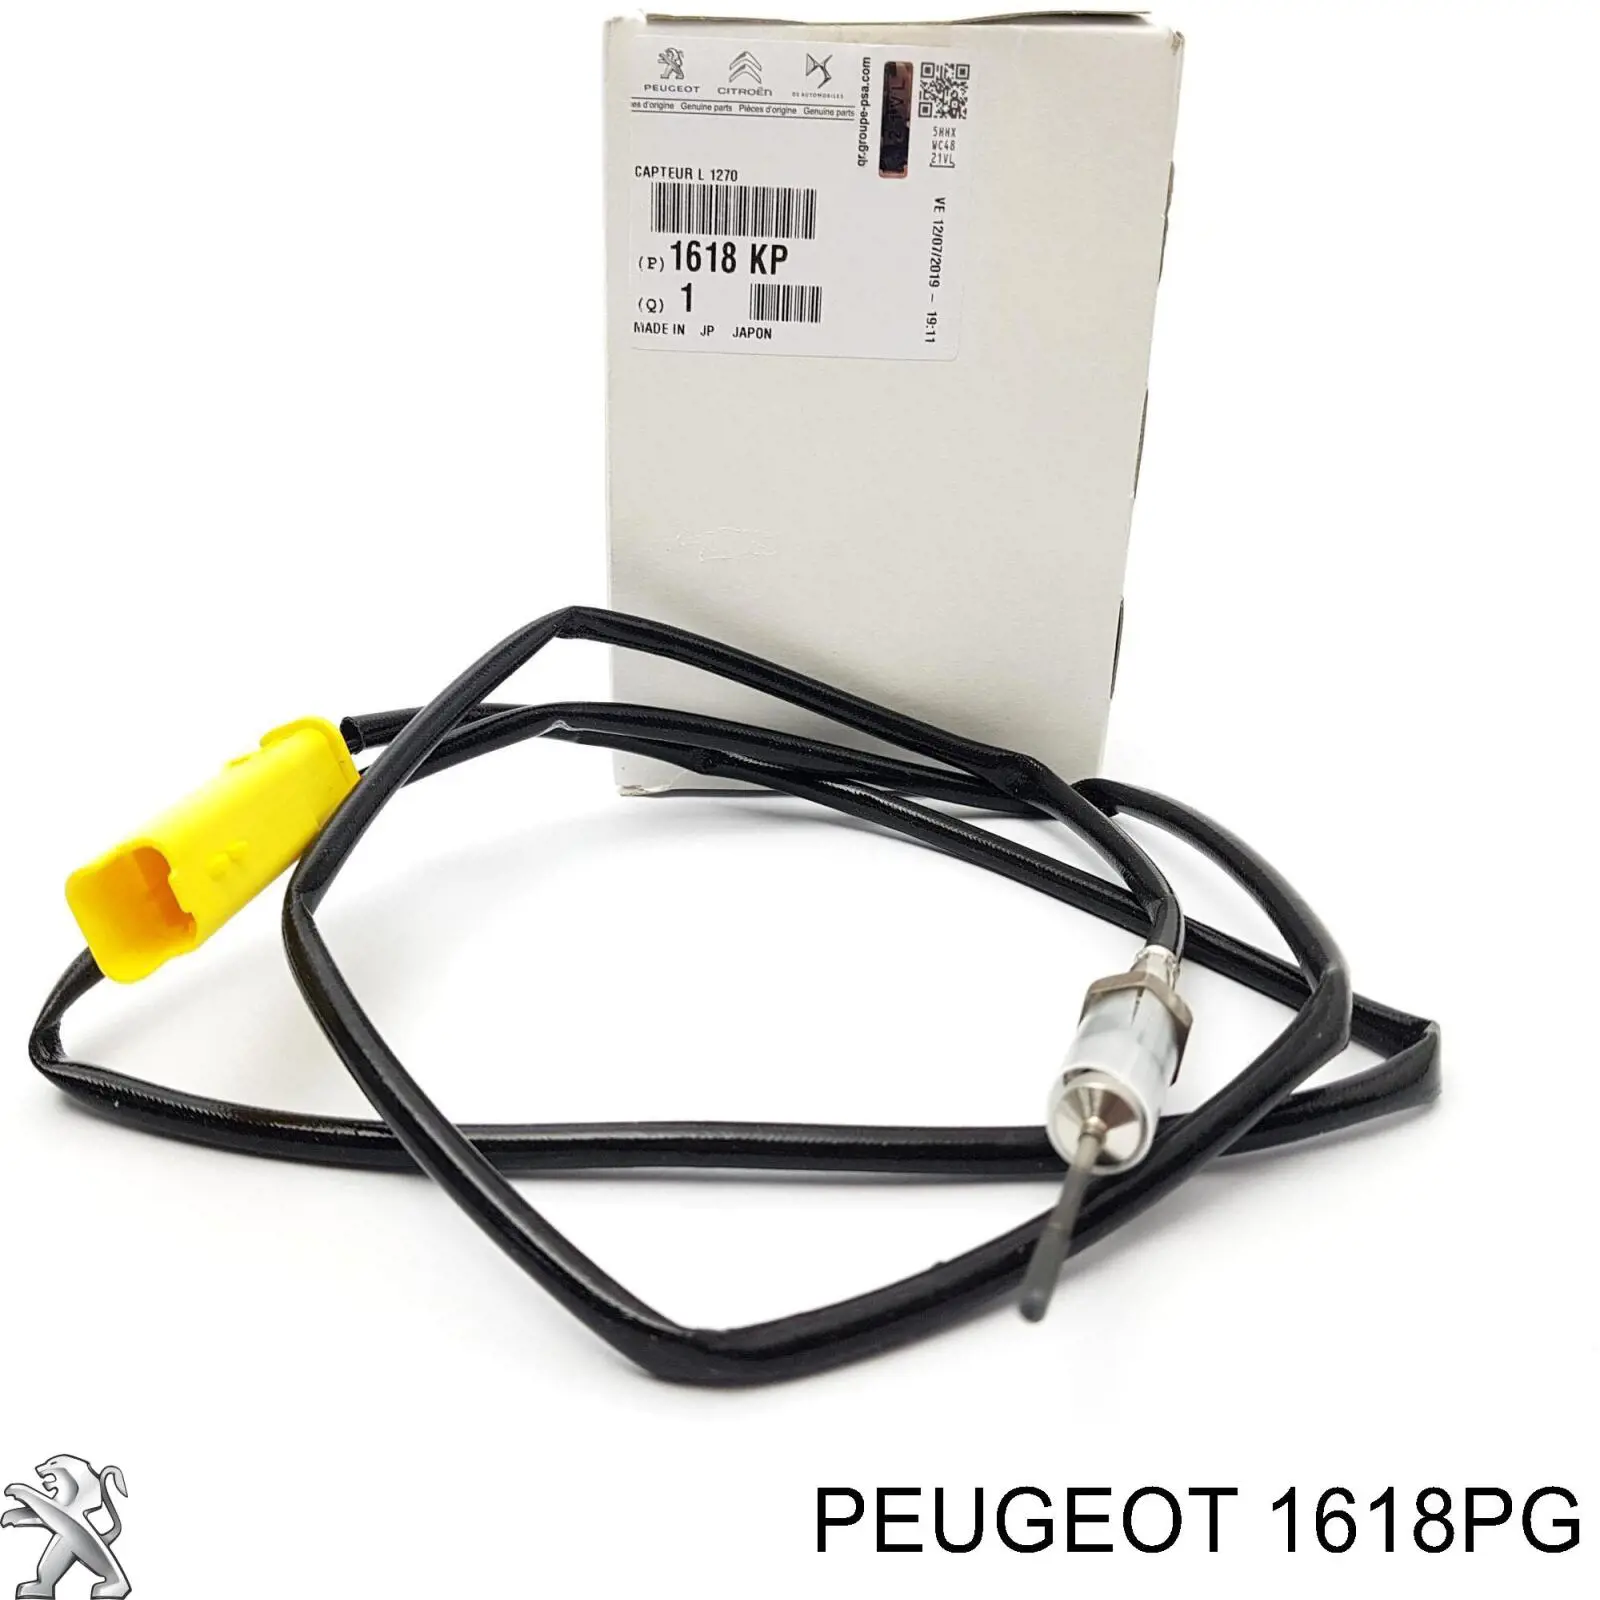 1618PG Peugeot/Citroen sensor de temperatura, gas de escape, después de filtro hollín/partículas